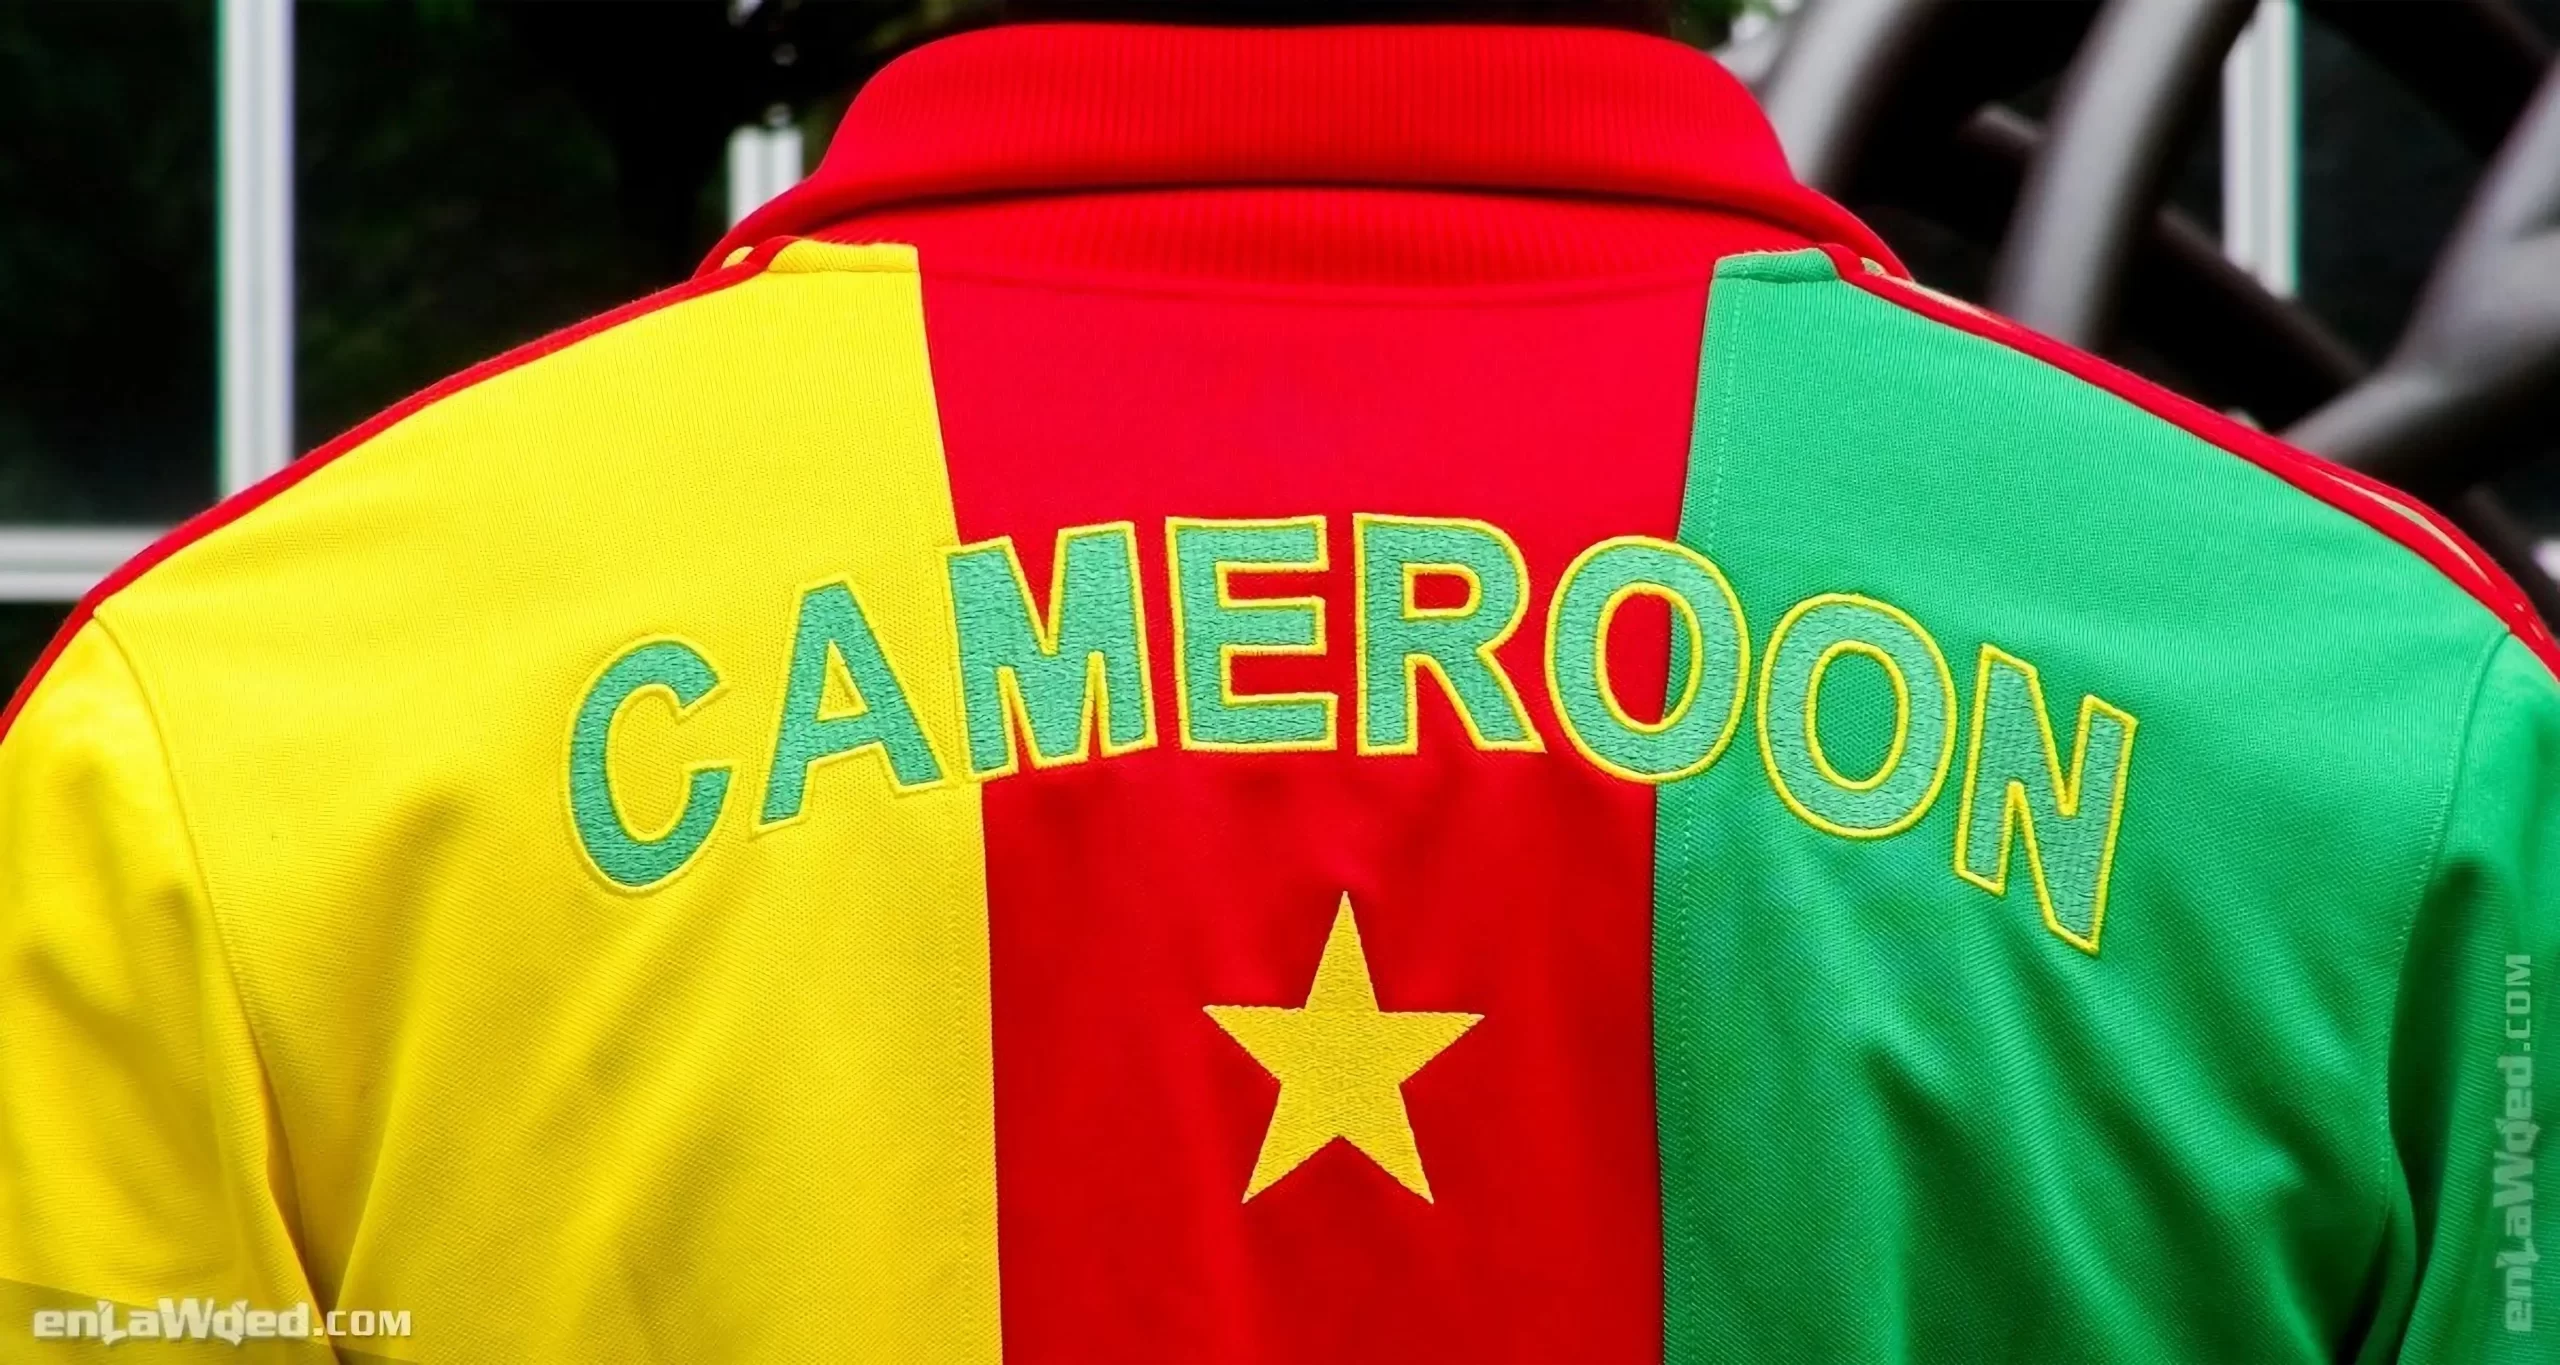 Men’s 2007 Cameroon Track Top by Adidas Originals: Jubilant (EnLawded.com file #lmchk90477ip2y122227kg9st)